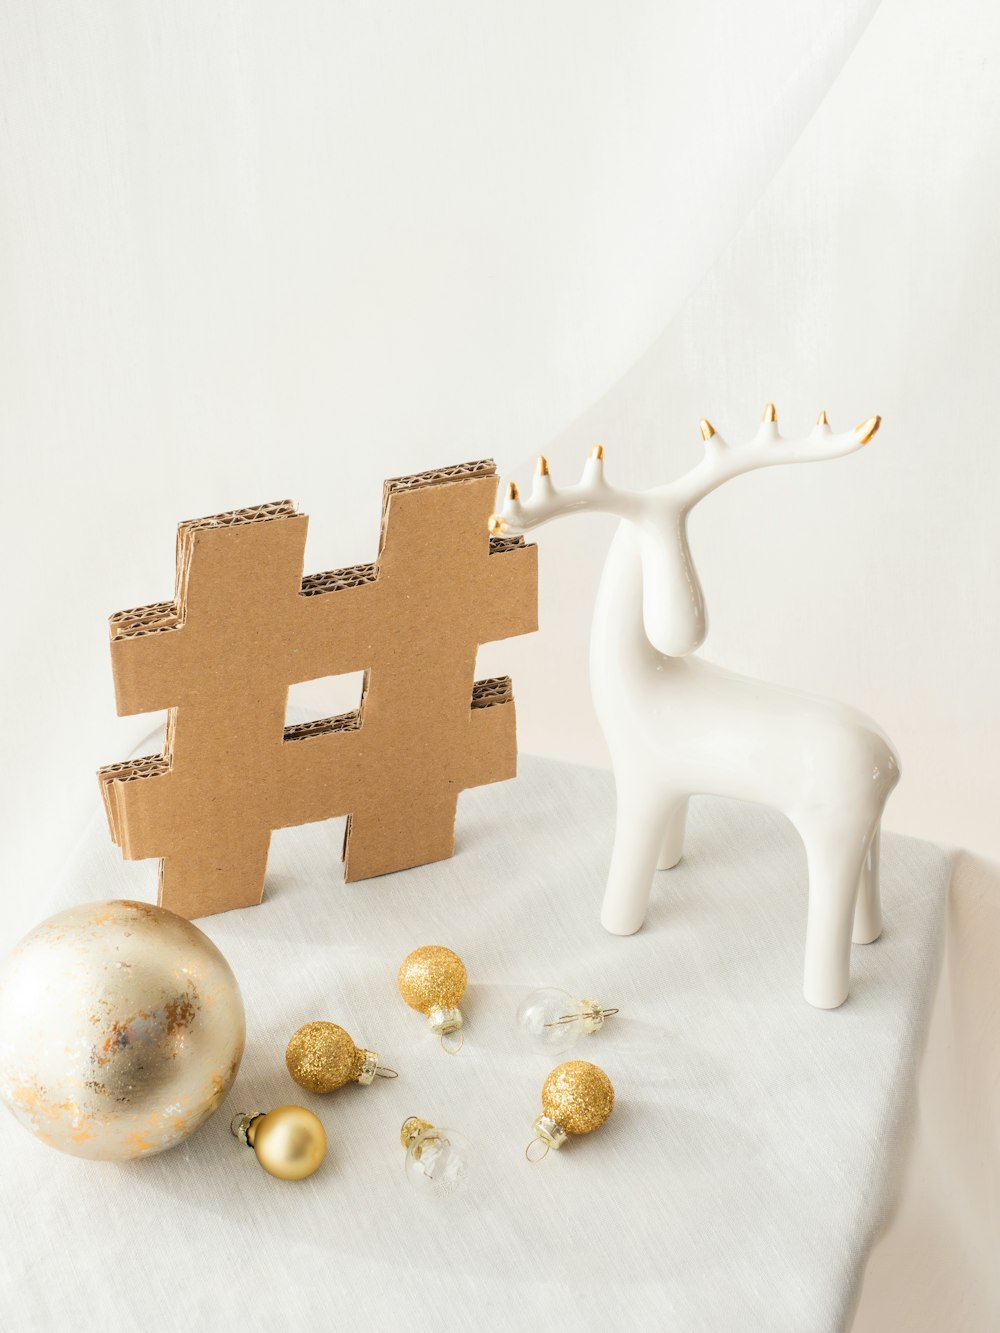 a white reindeer figurine next to a cardboard box